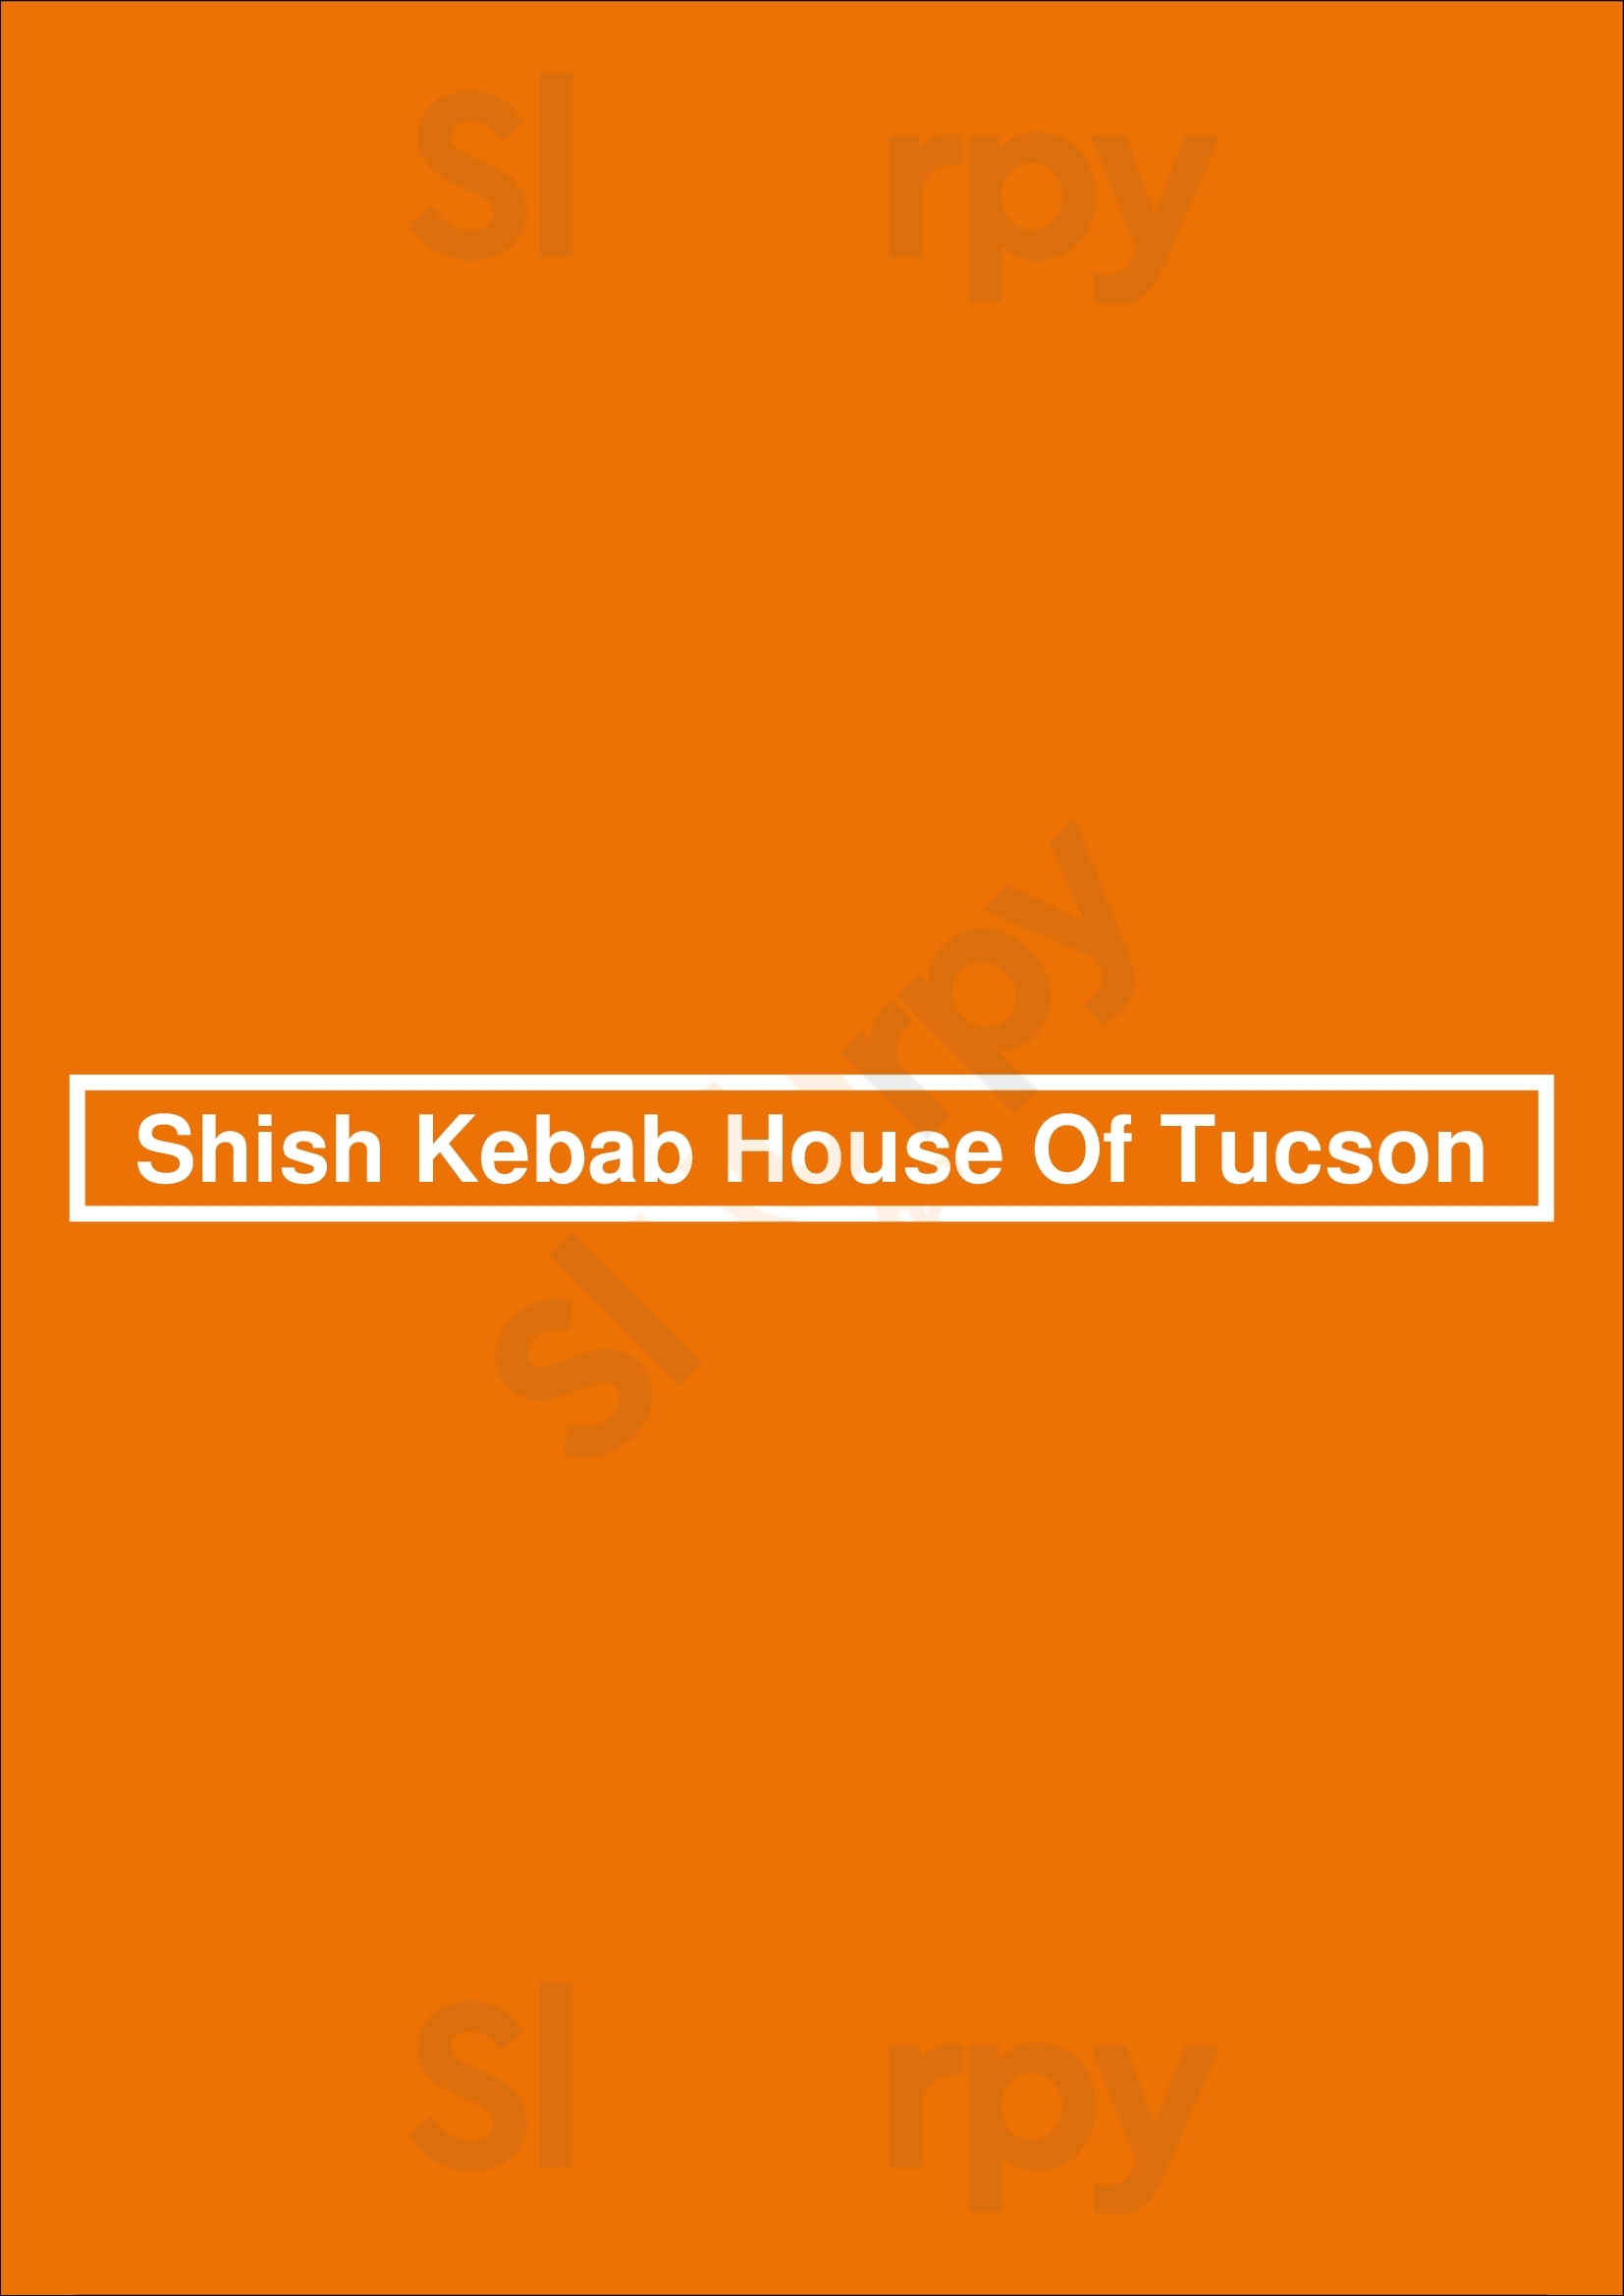 Shish Kebab House Of Tucson Tucson Menu - 1